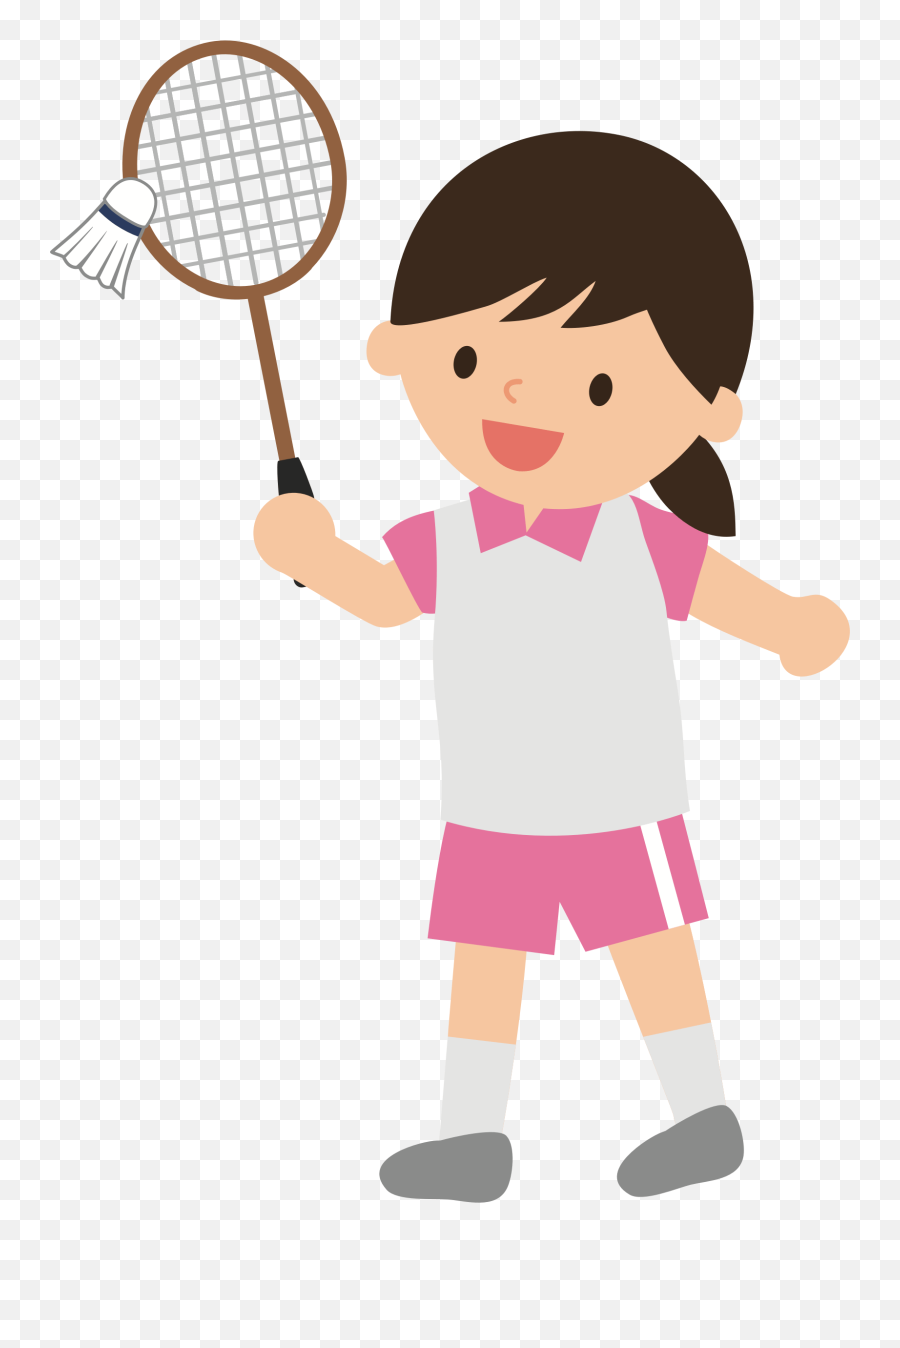 Badminton Squash Racket Transparent - Girl Playing Badminton Clipart ...